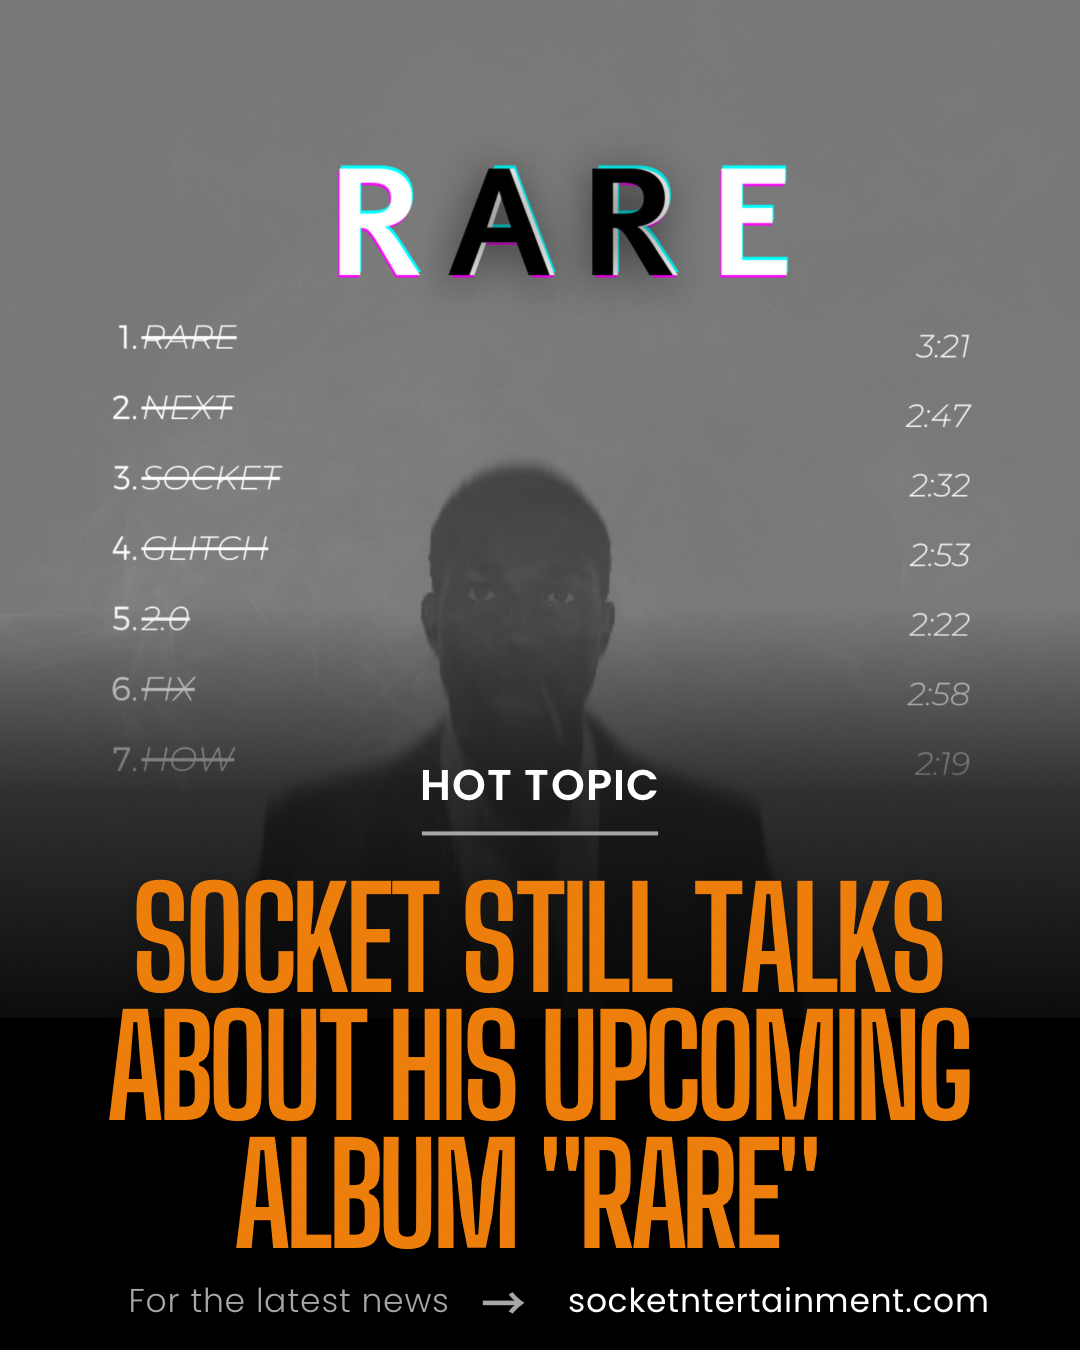 Socket's upcoming album "Rare"